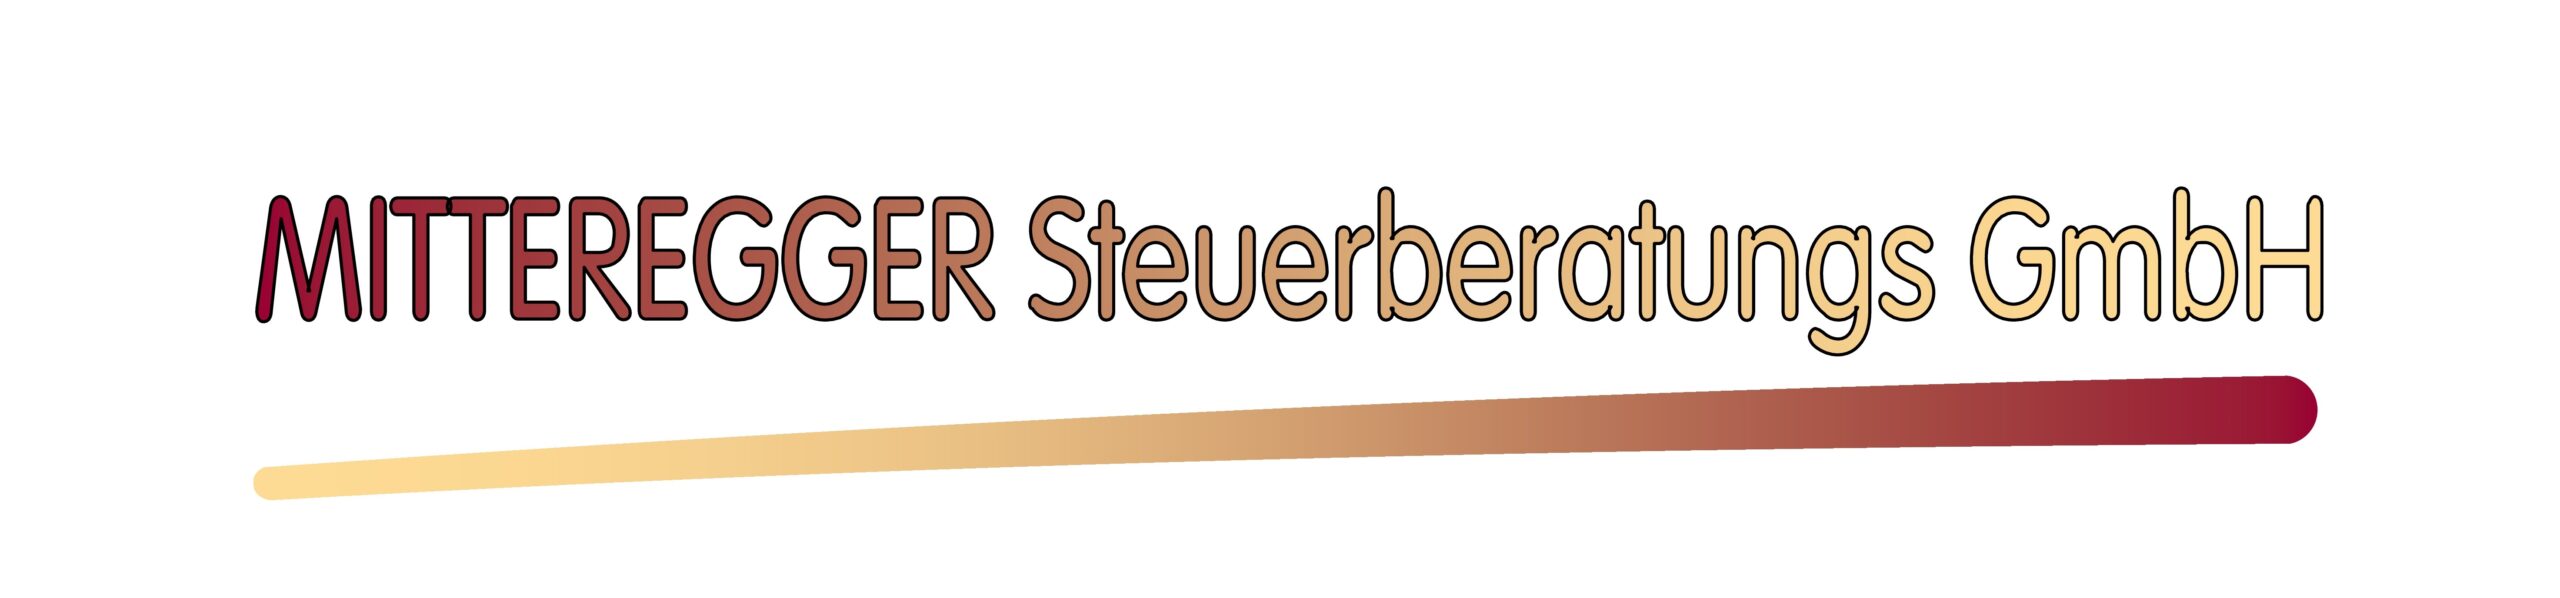 MITTEREGGER Steuerberatungs GmbH